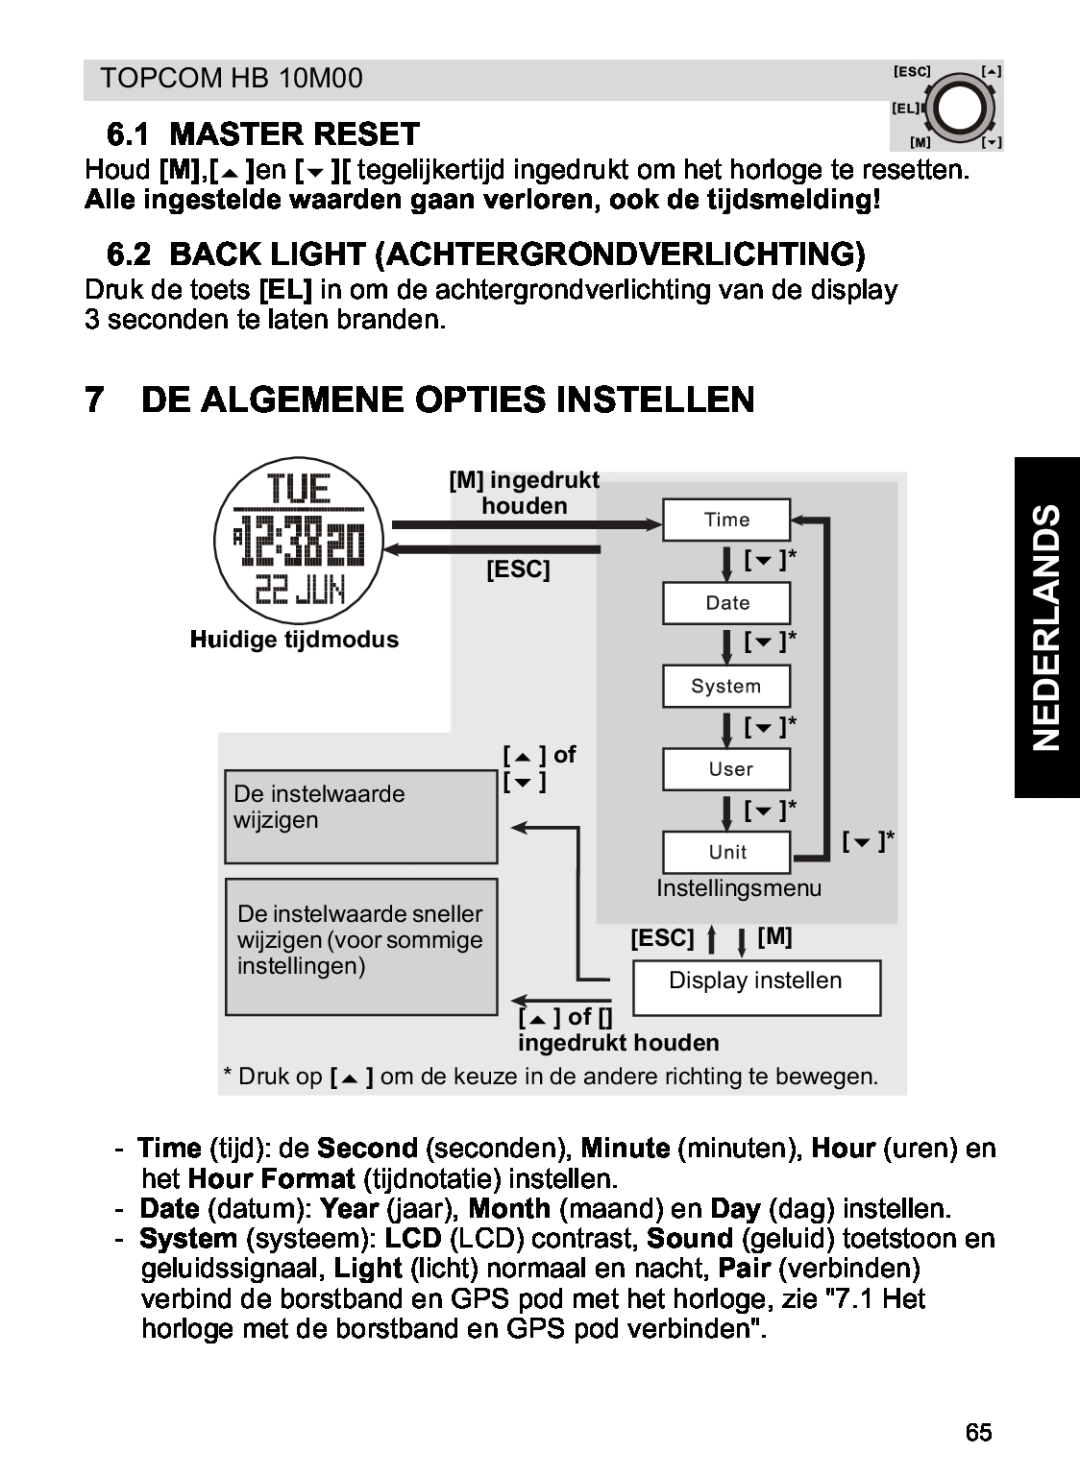 Topcom HB 10M00 manual De Algemene Opties Instellen, Back Light Achtergrondverlichting, Master Reset, Nederlands 